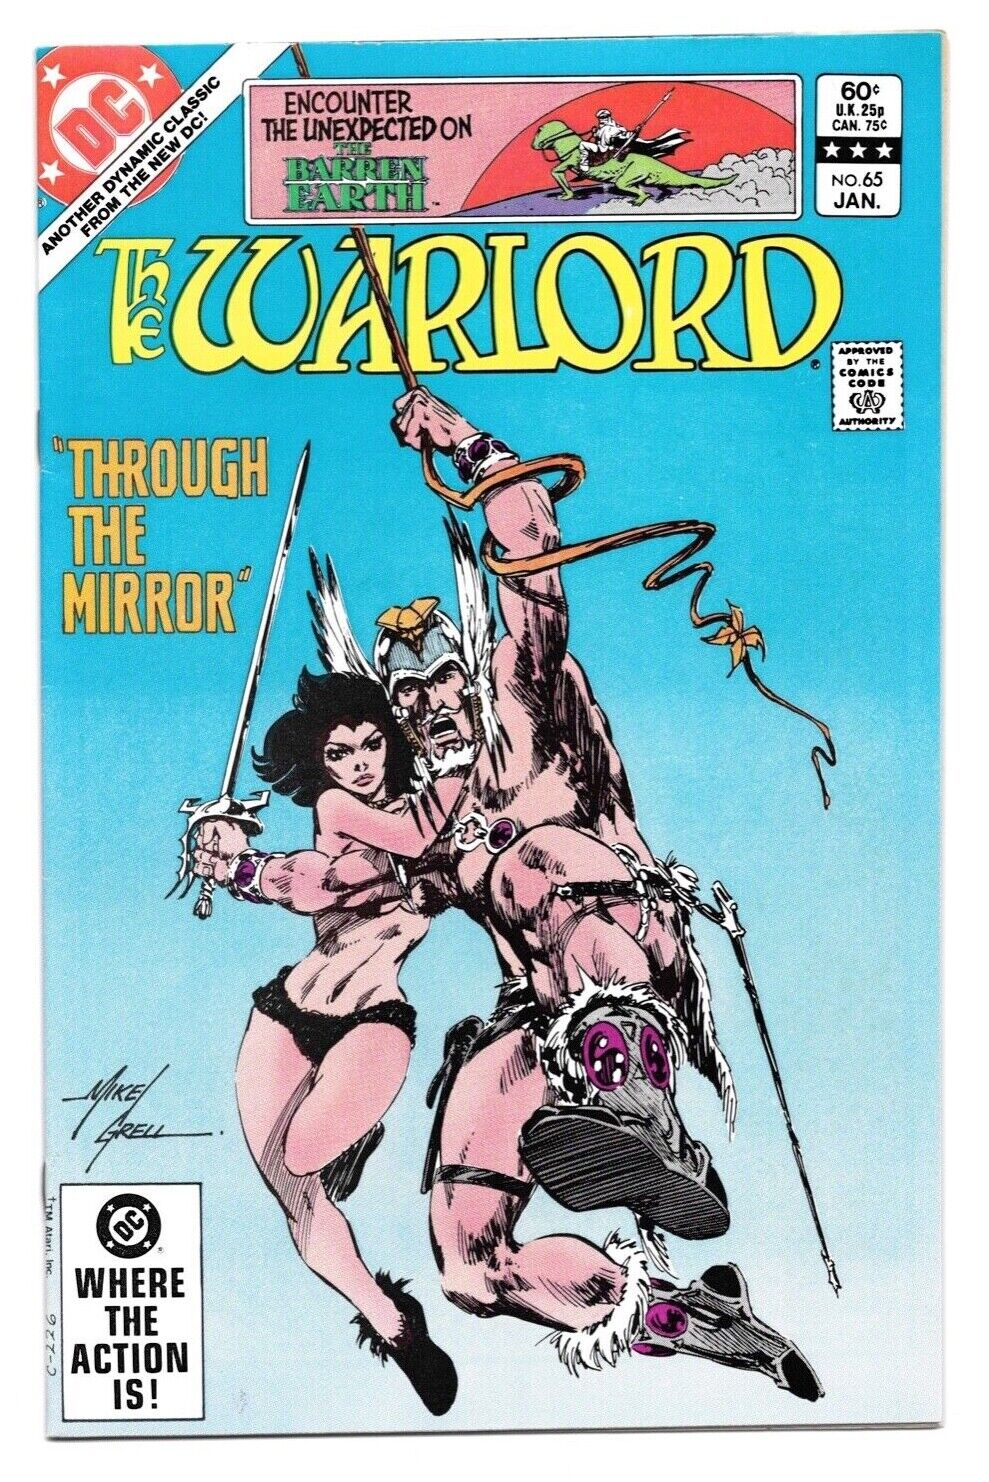 The Warlord Volume 8 No. 65 Through The Mirror (1983) vf condition / sh2